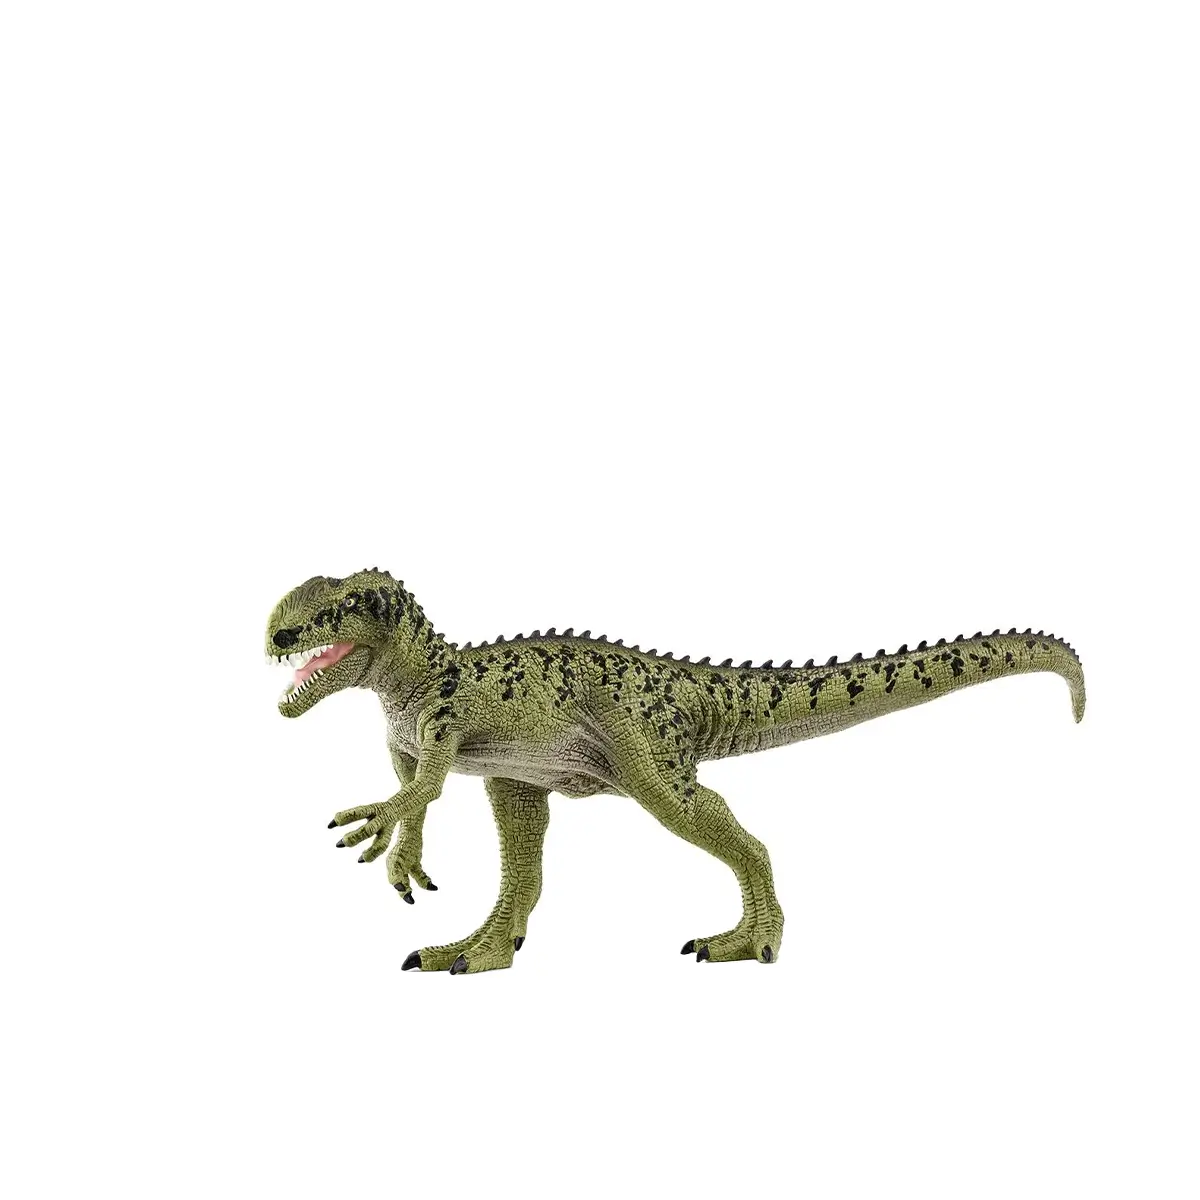  Schleich Dinosaurs Realistic Monolophosaurus Figure